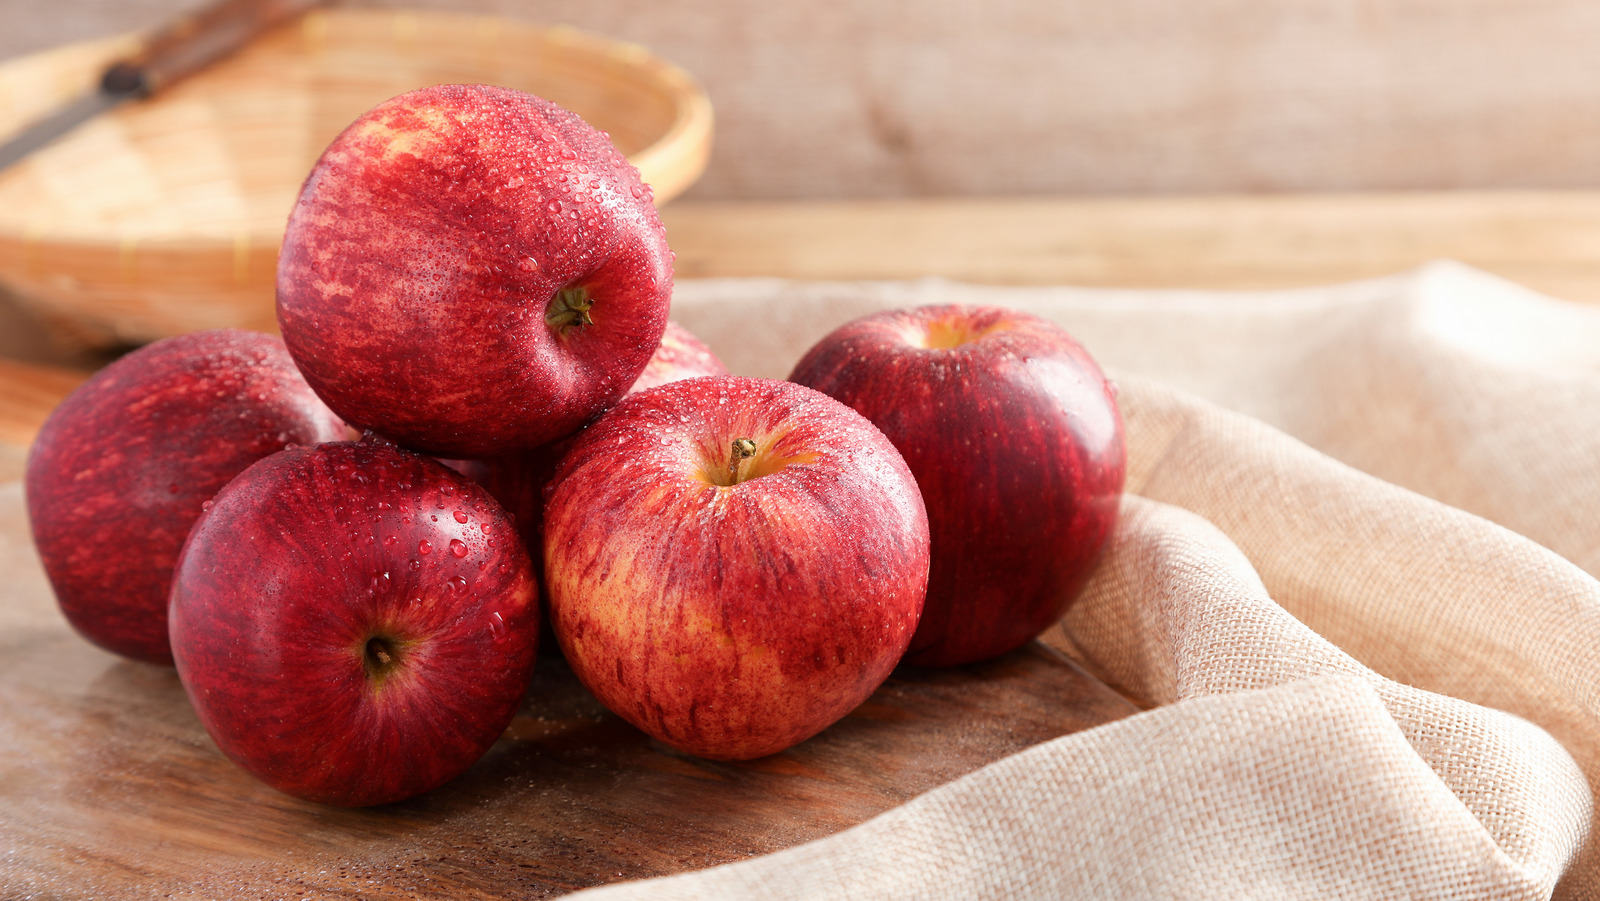 https://www.tastingtable.com/img/gallery/the-absolute-best-way-to-keep-apples-fresh/l-intro-1648153419.jpg